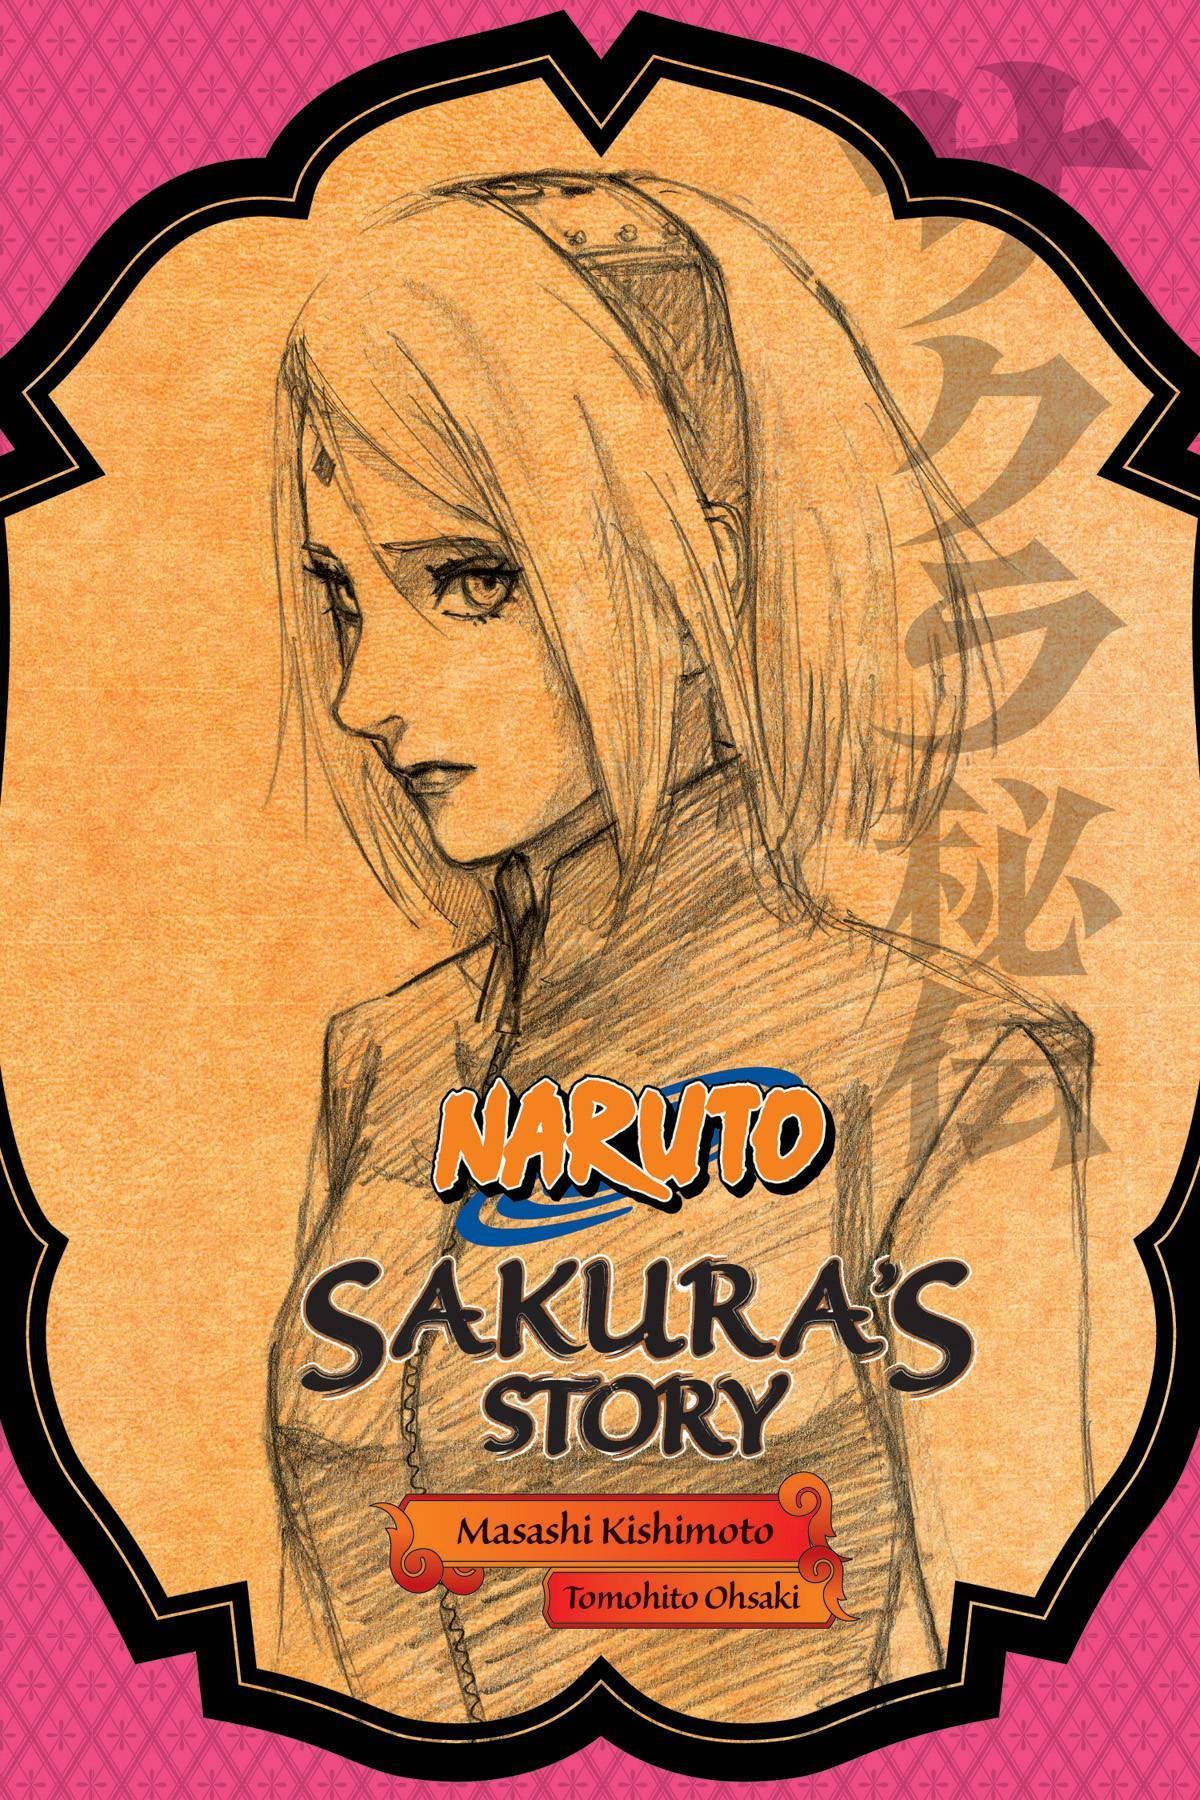 NARUTO SAKURA STORY NOVEL